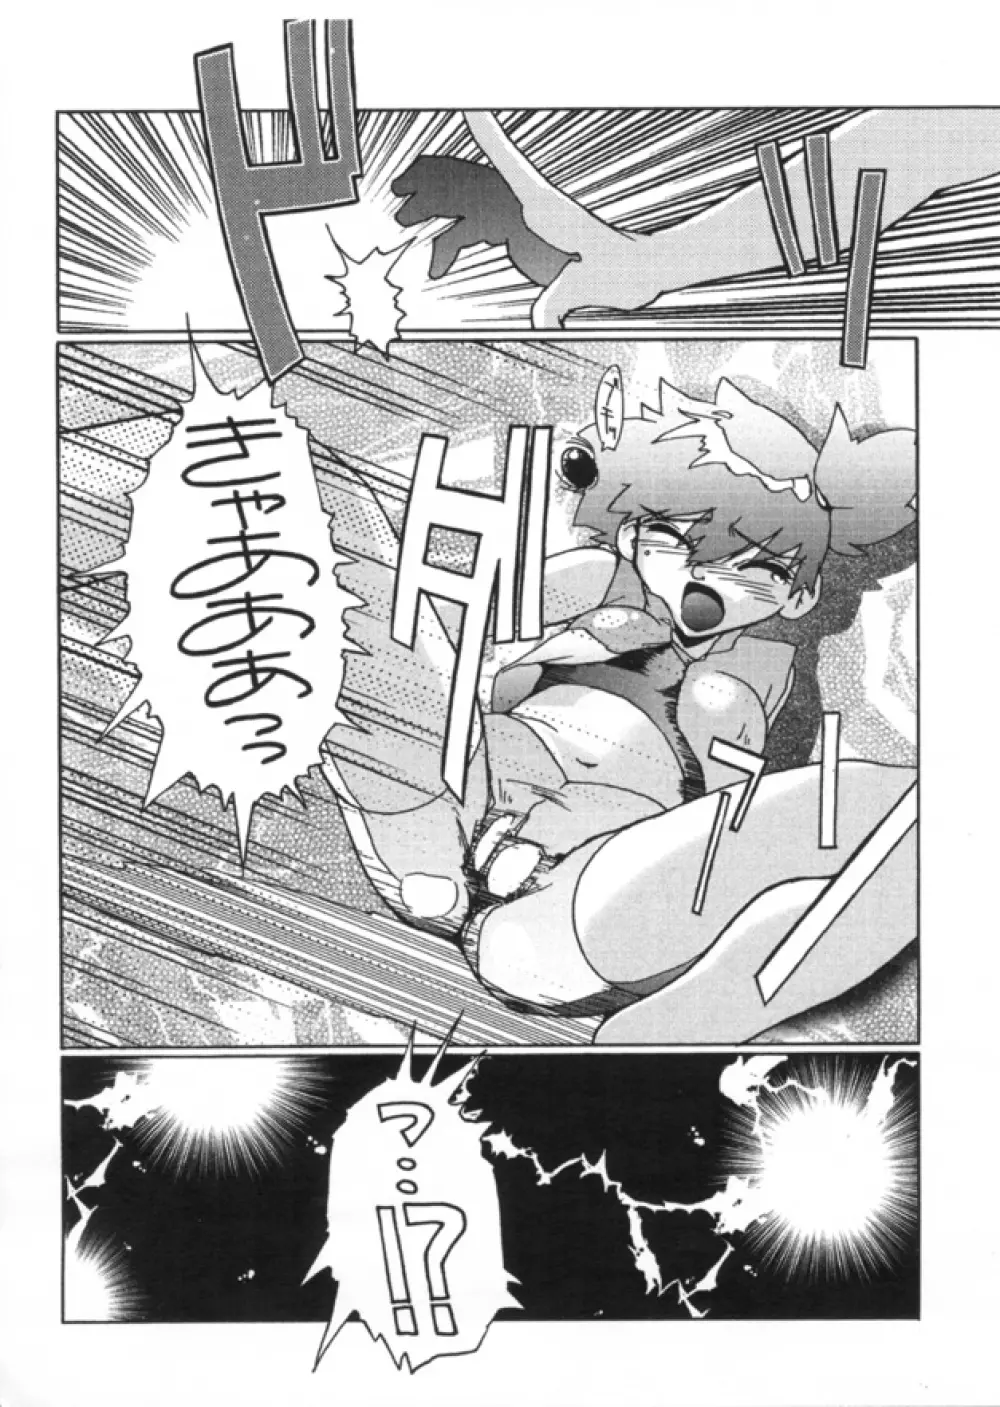 KASUMIX XPLOSION Kasumi Comic part5 - page49